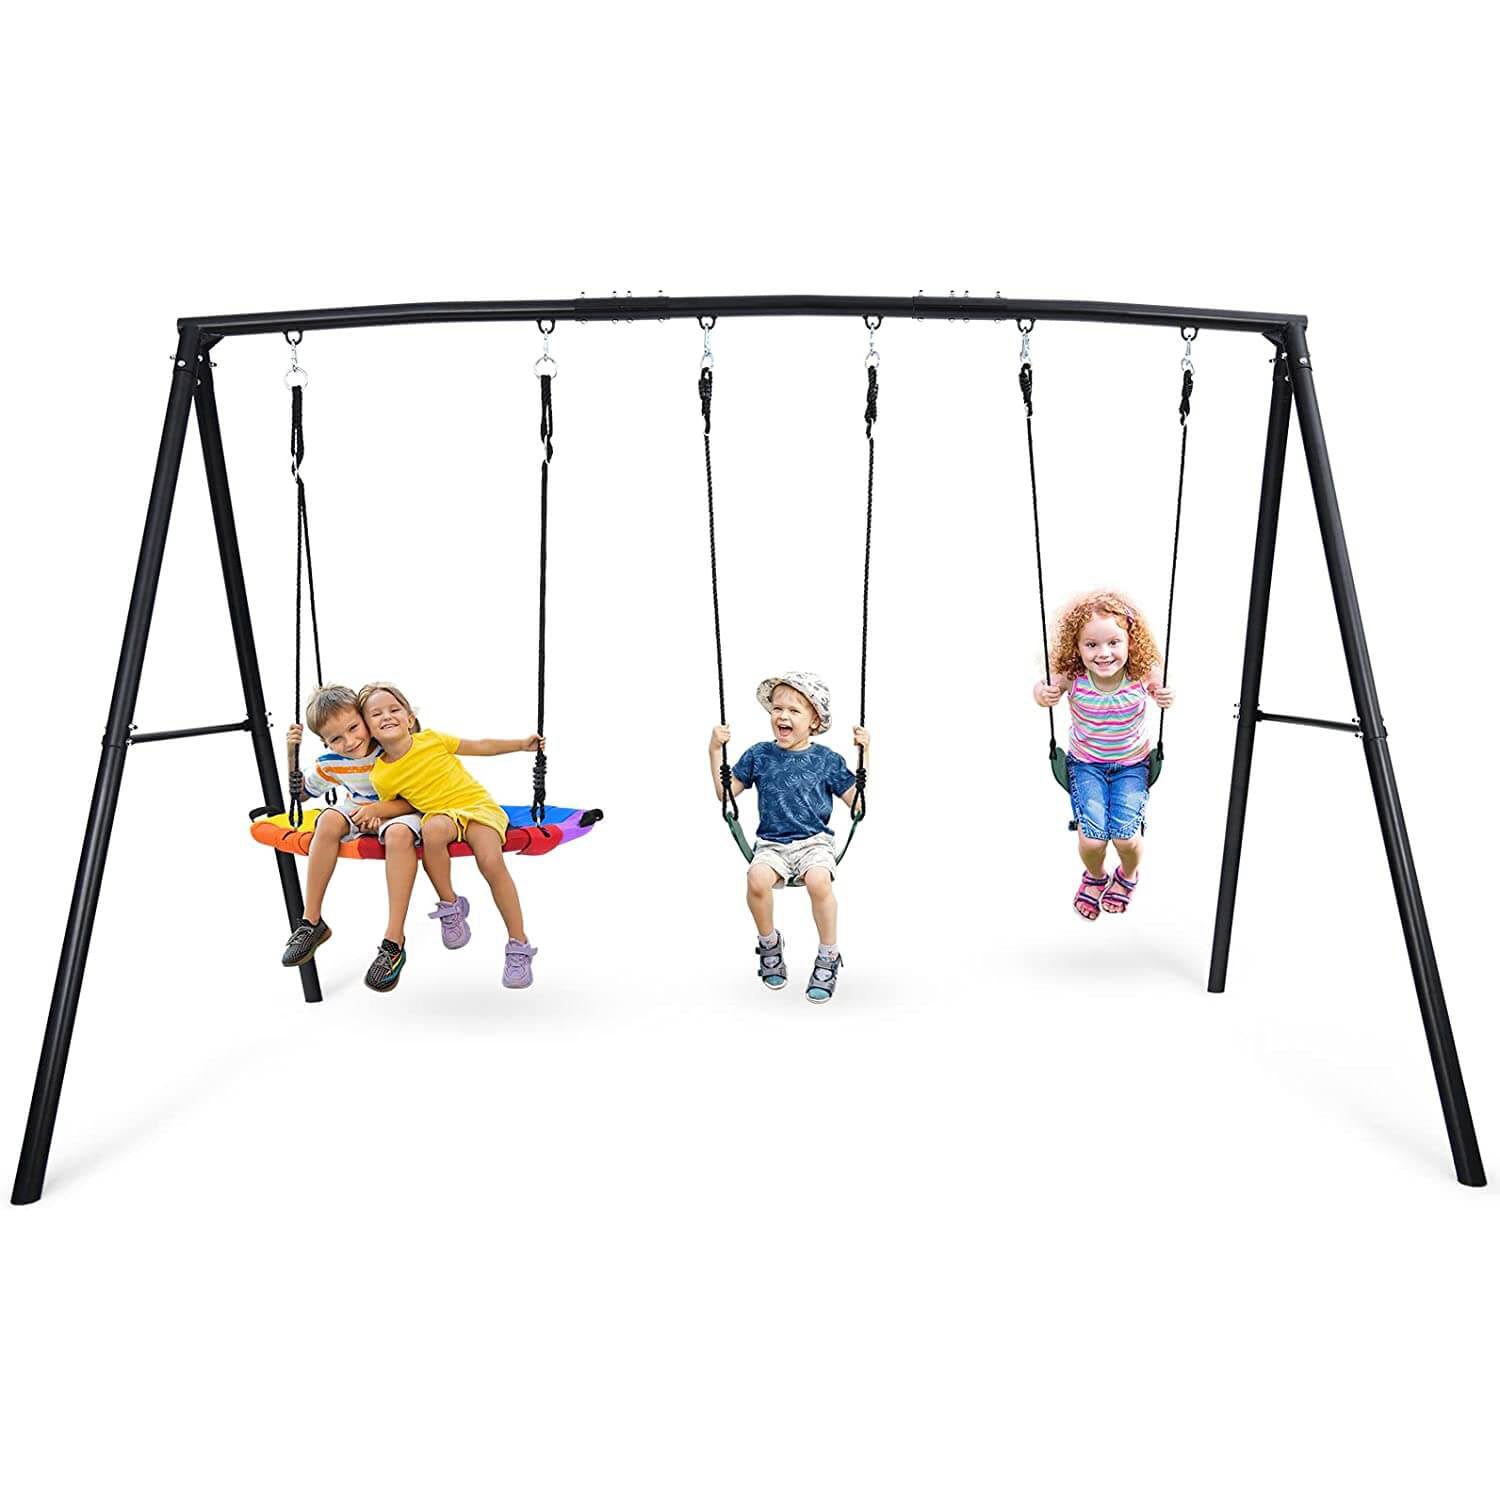 500lb A Frame Swing Set for Backyard with Saucer Swing, 2 Belt Swings